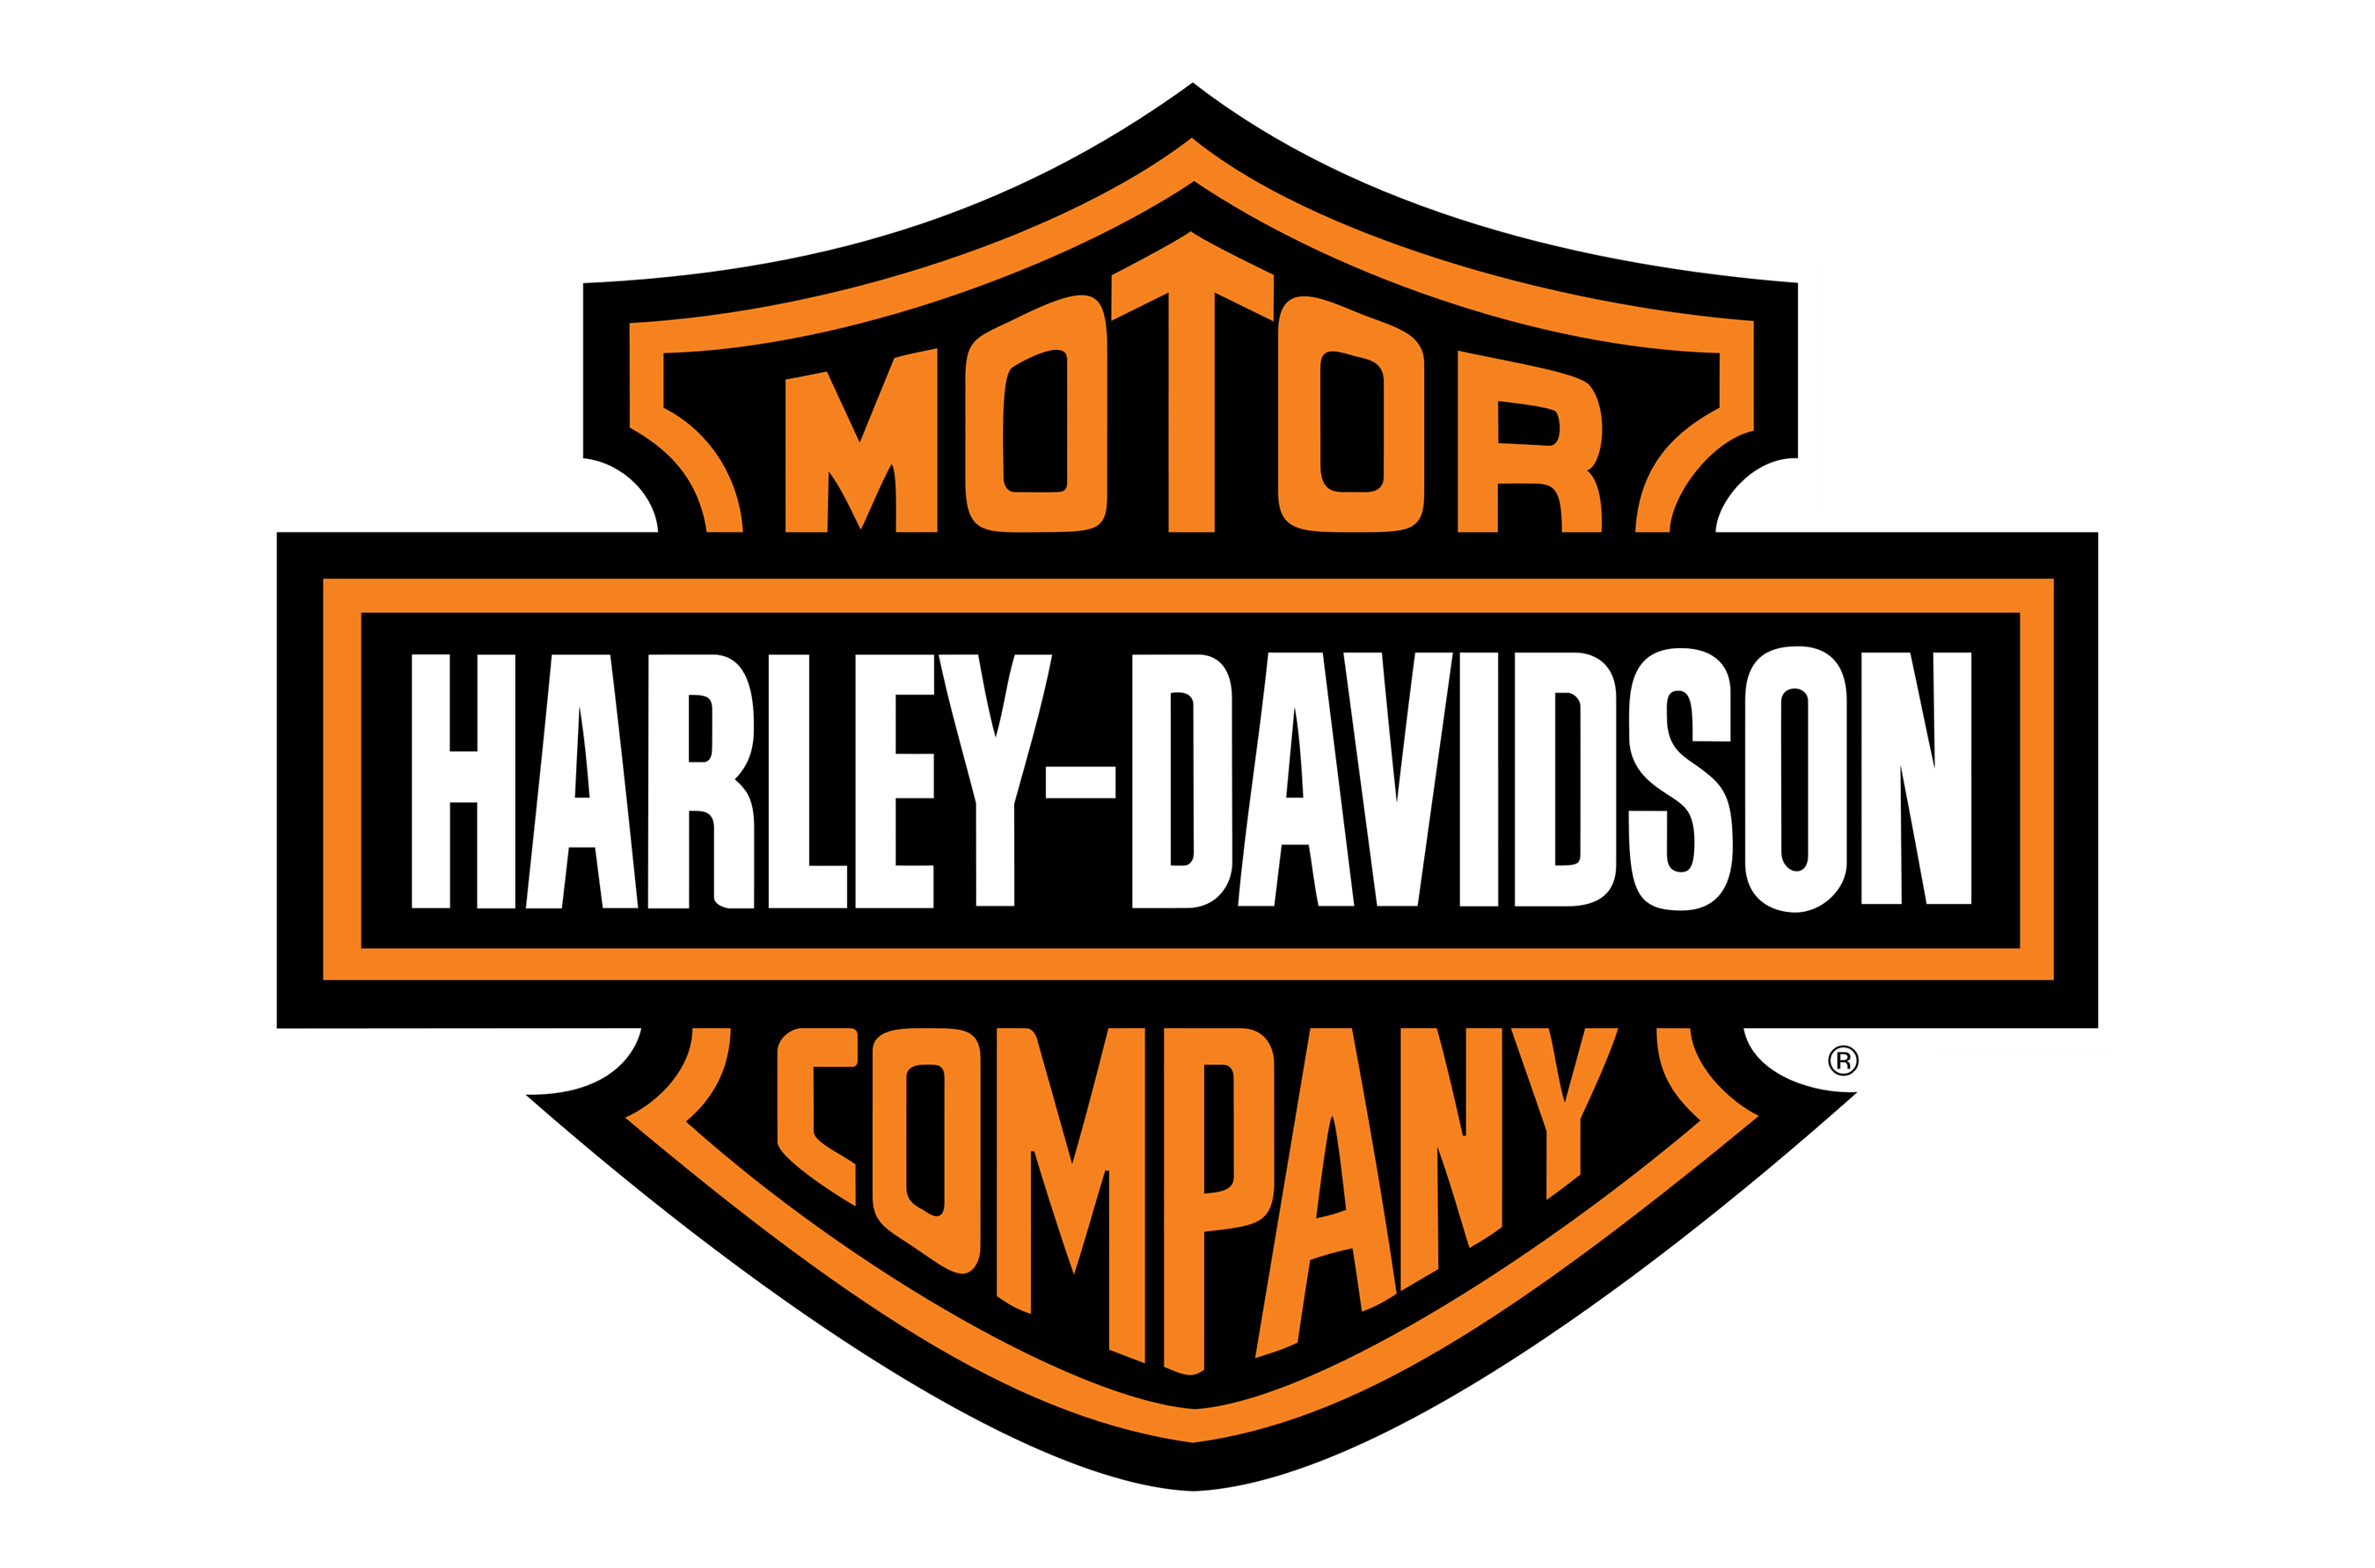 https://0201.nccdn.net/1_2/000/000/135/51e/harley-davidson-logo.png